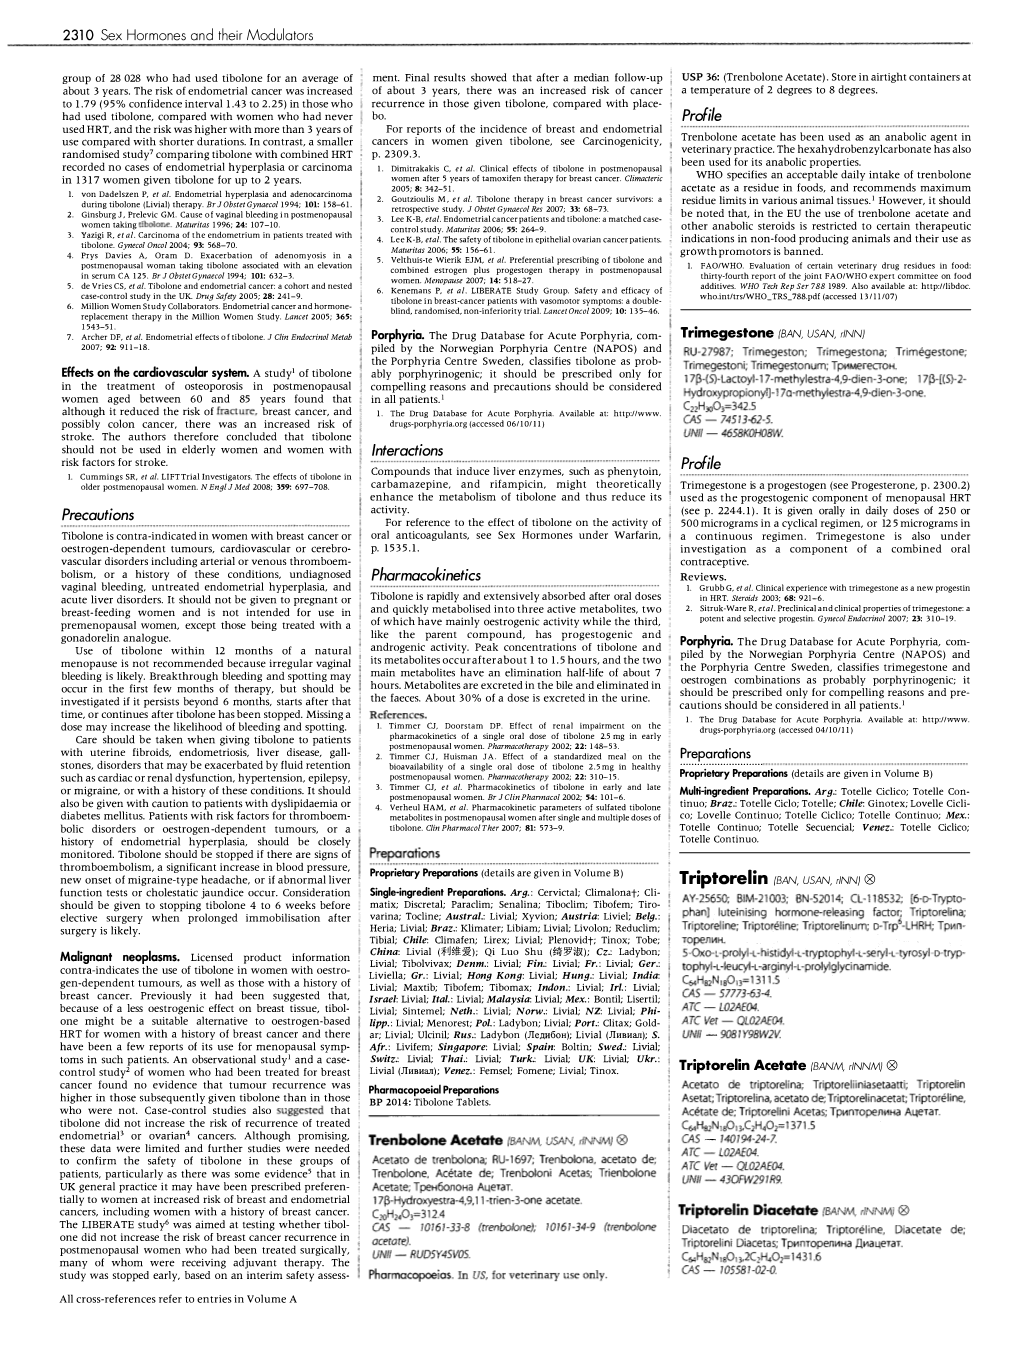 Precautions Interactions Pharmacokinetics Profile Profile